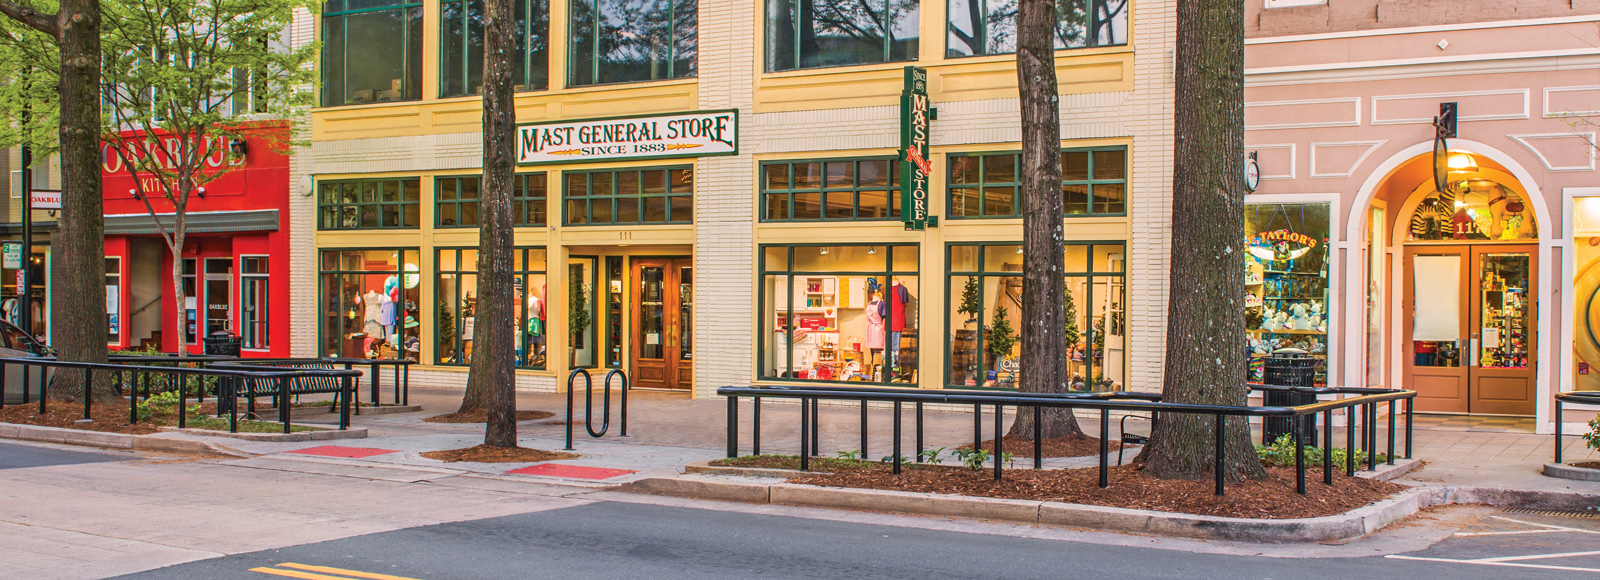 Visit Greenville - Mast General Store